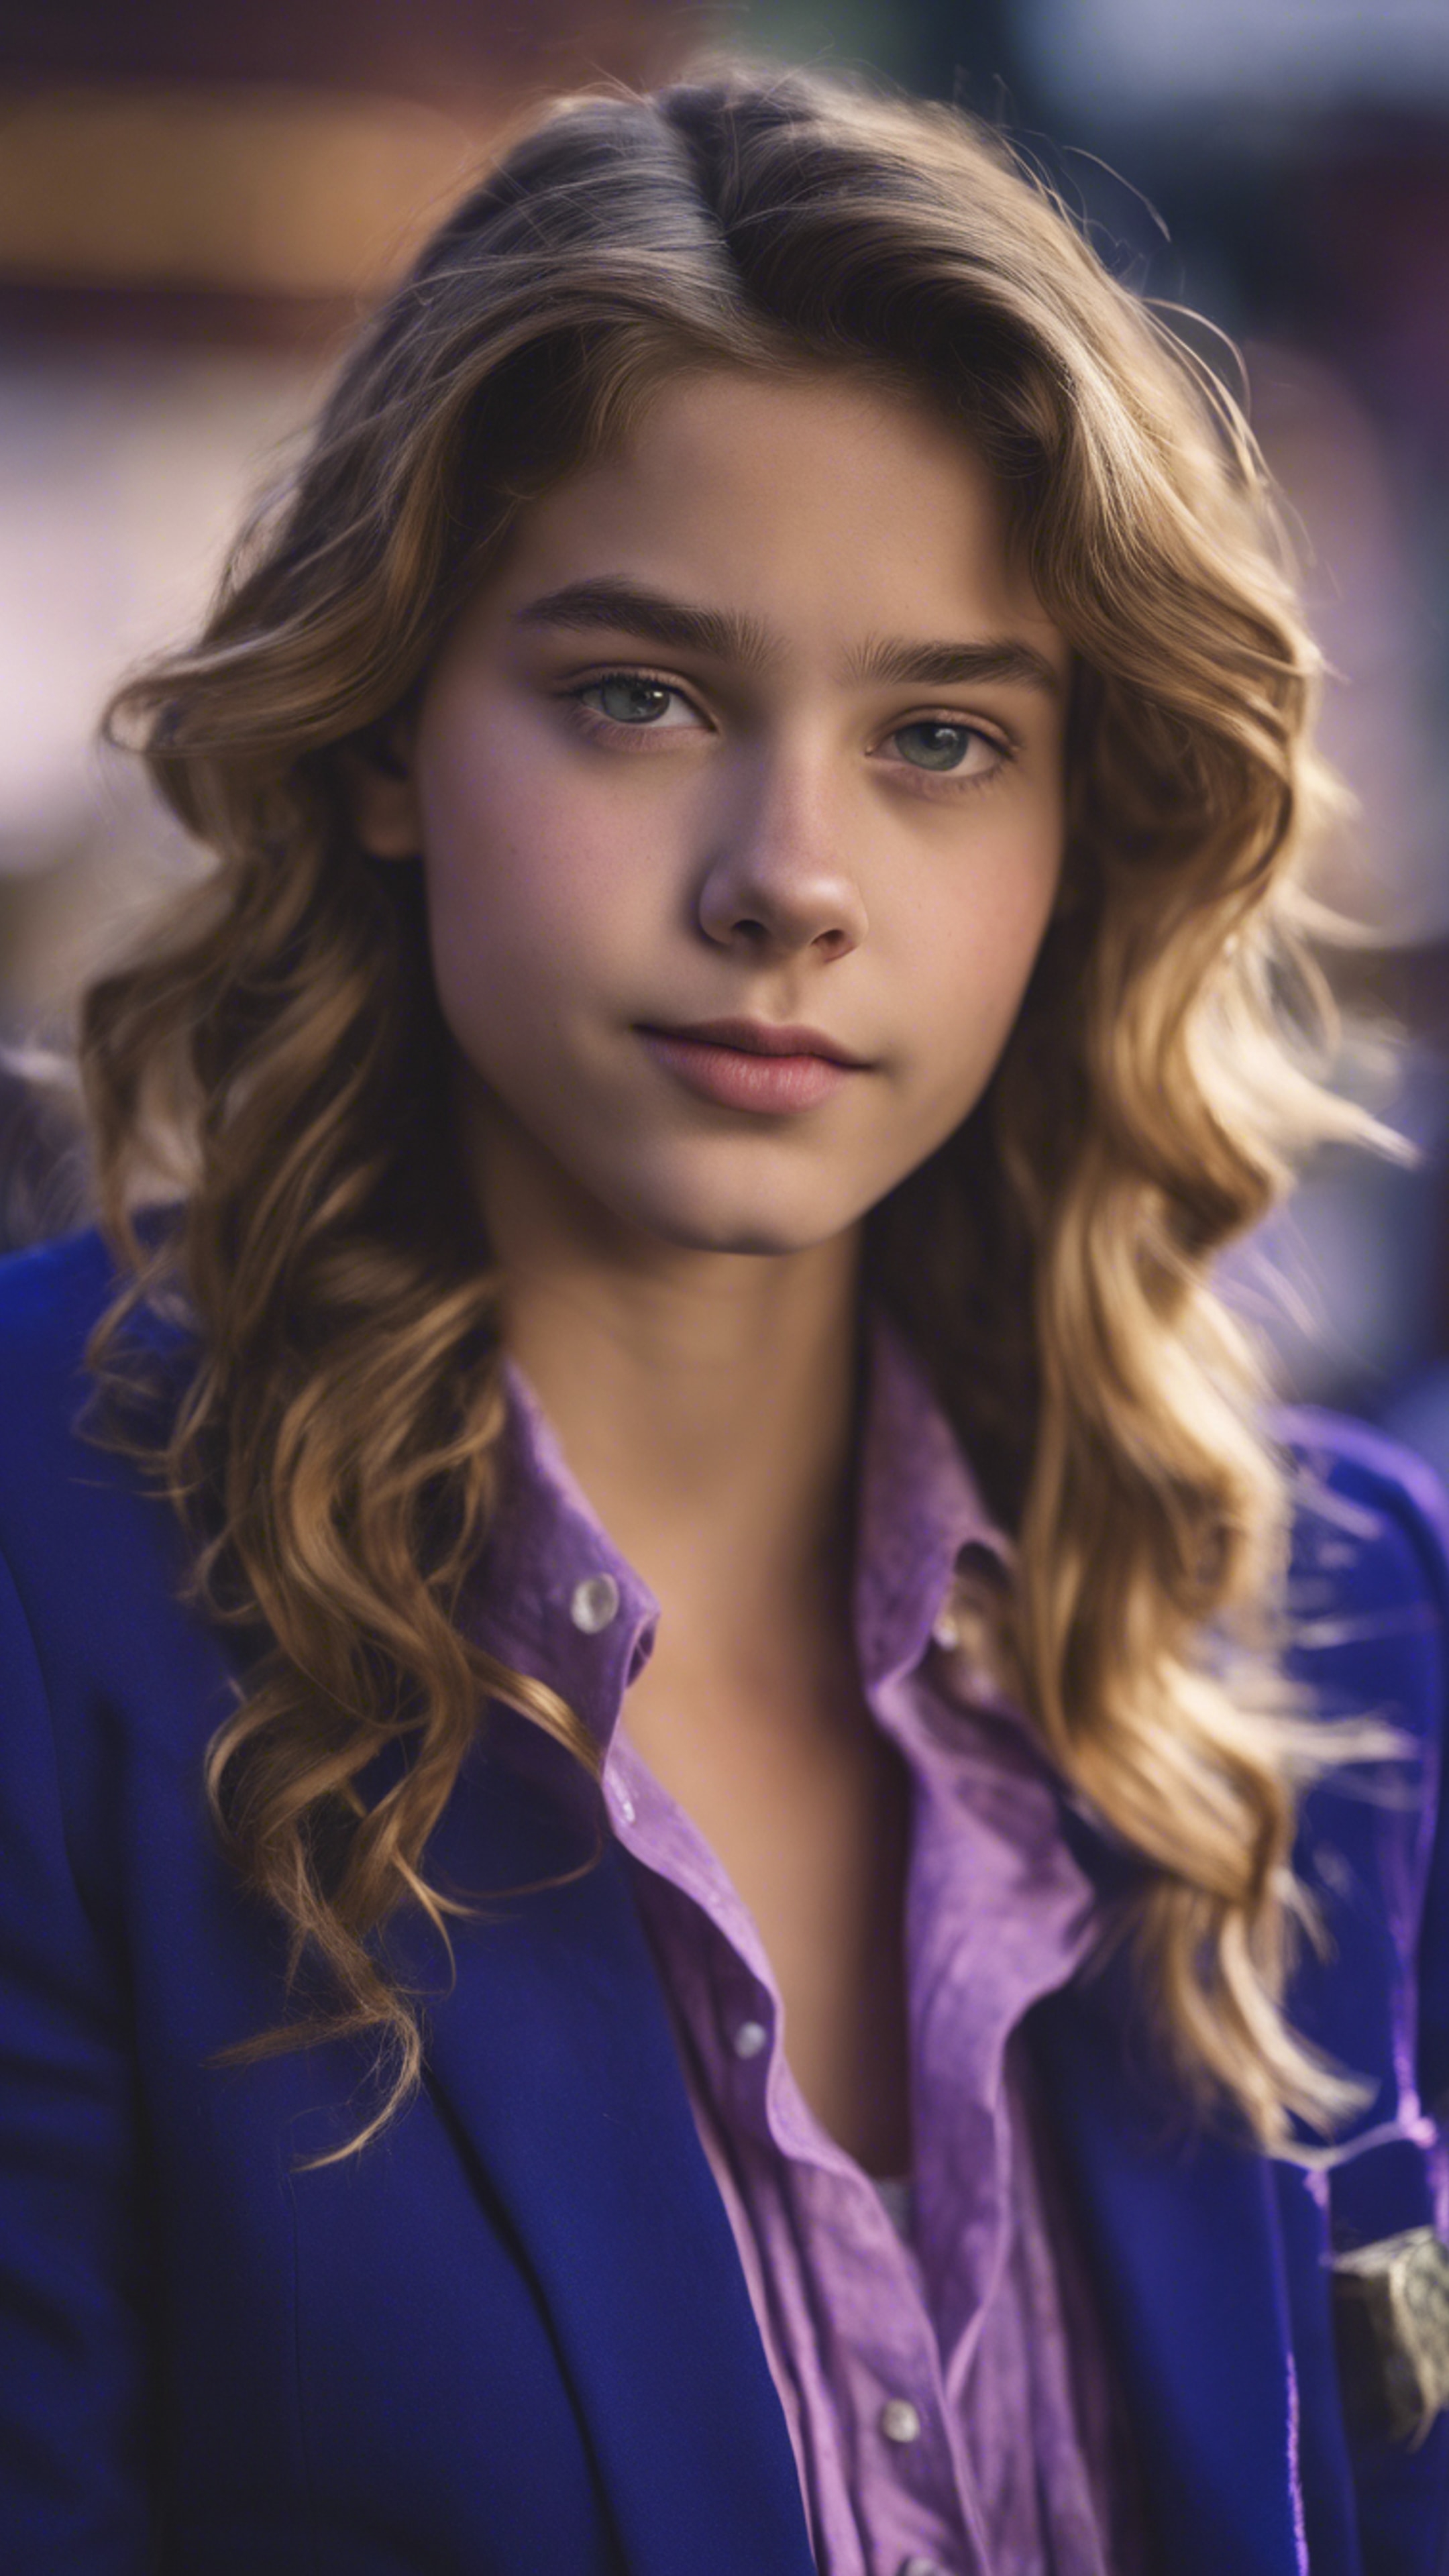 A preppy teenage girl wearing a royal blue blazer with purple button-down shirt. Обои[785e4ff270ea4e79b652]